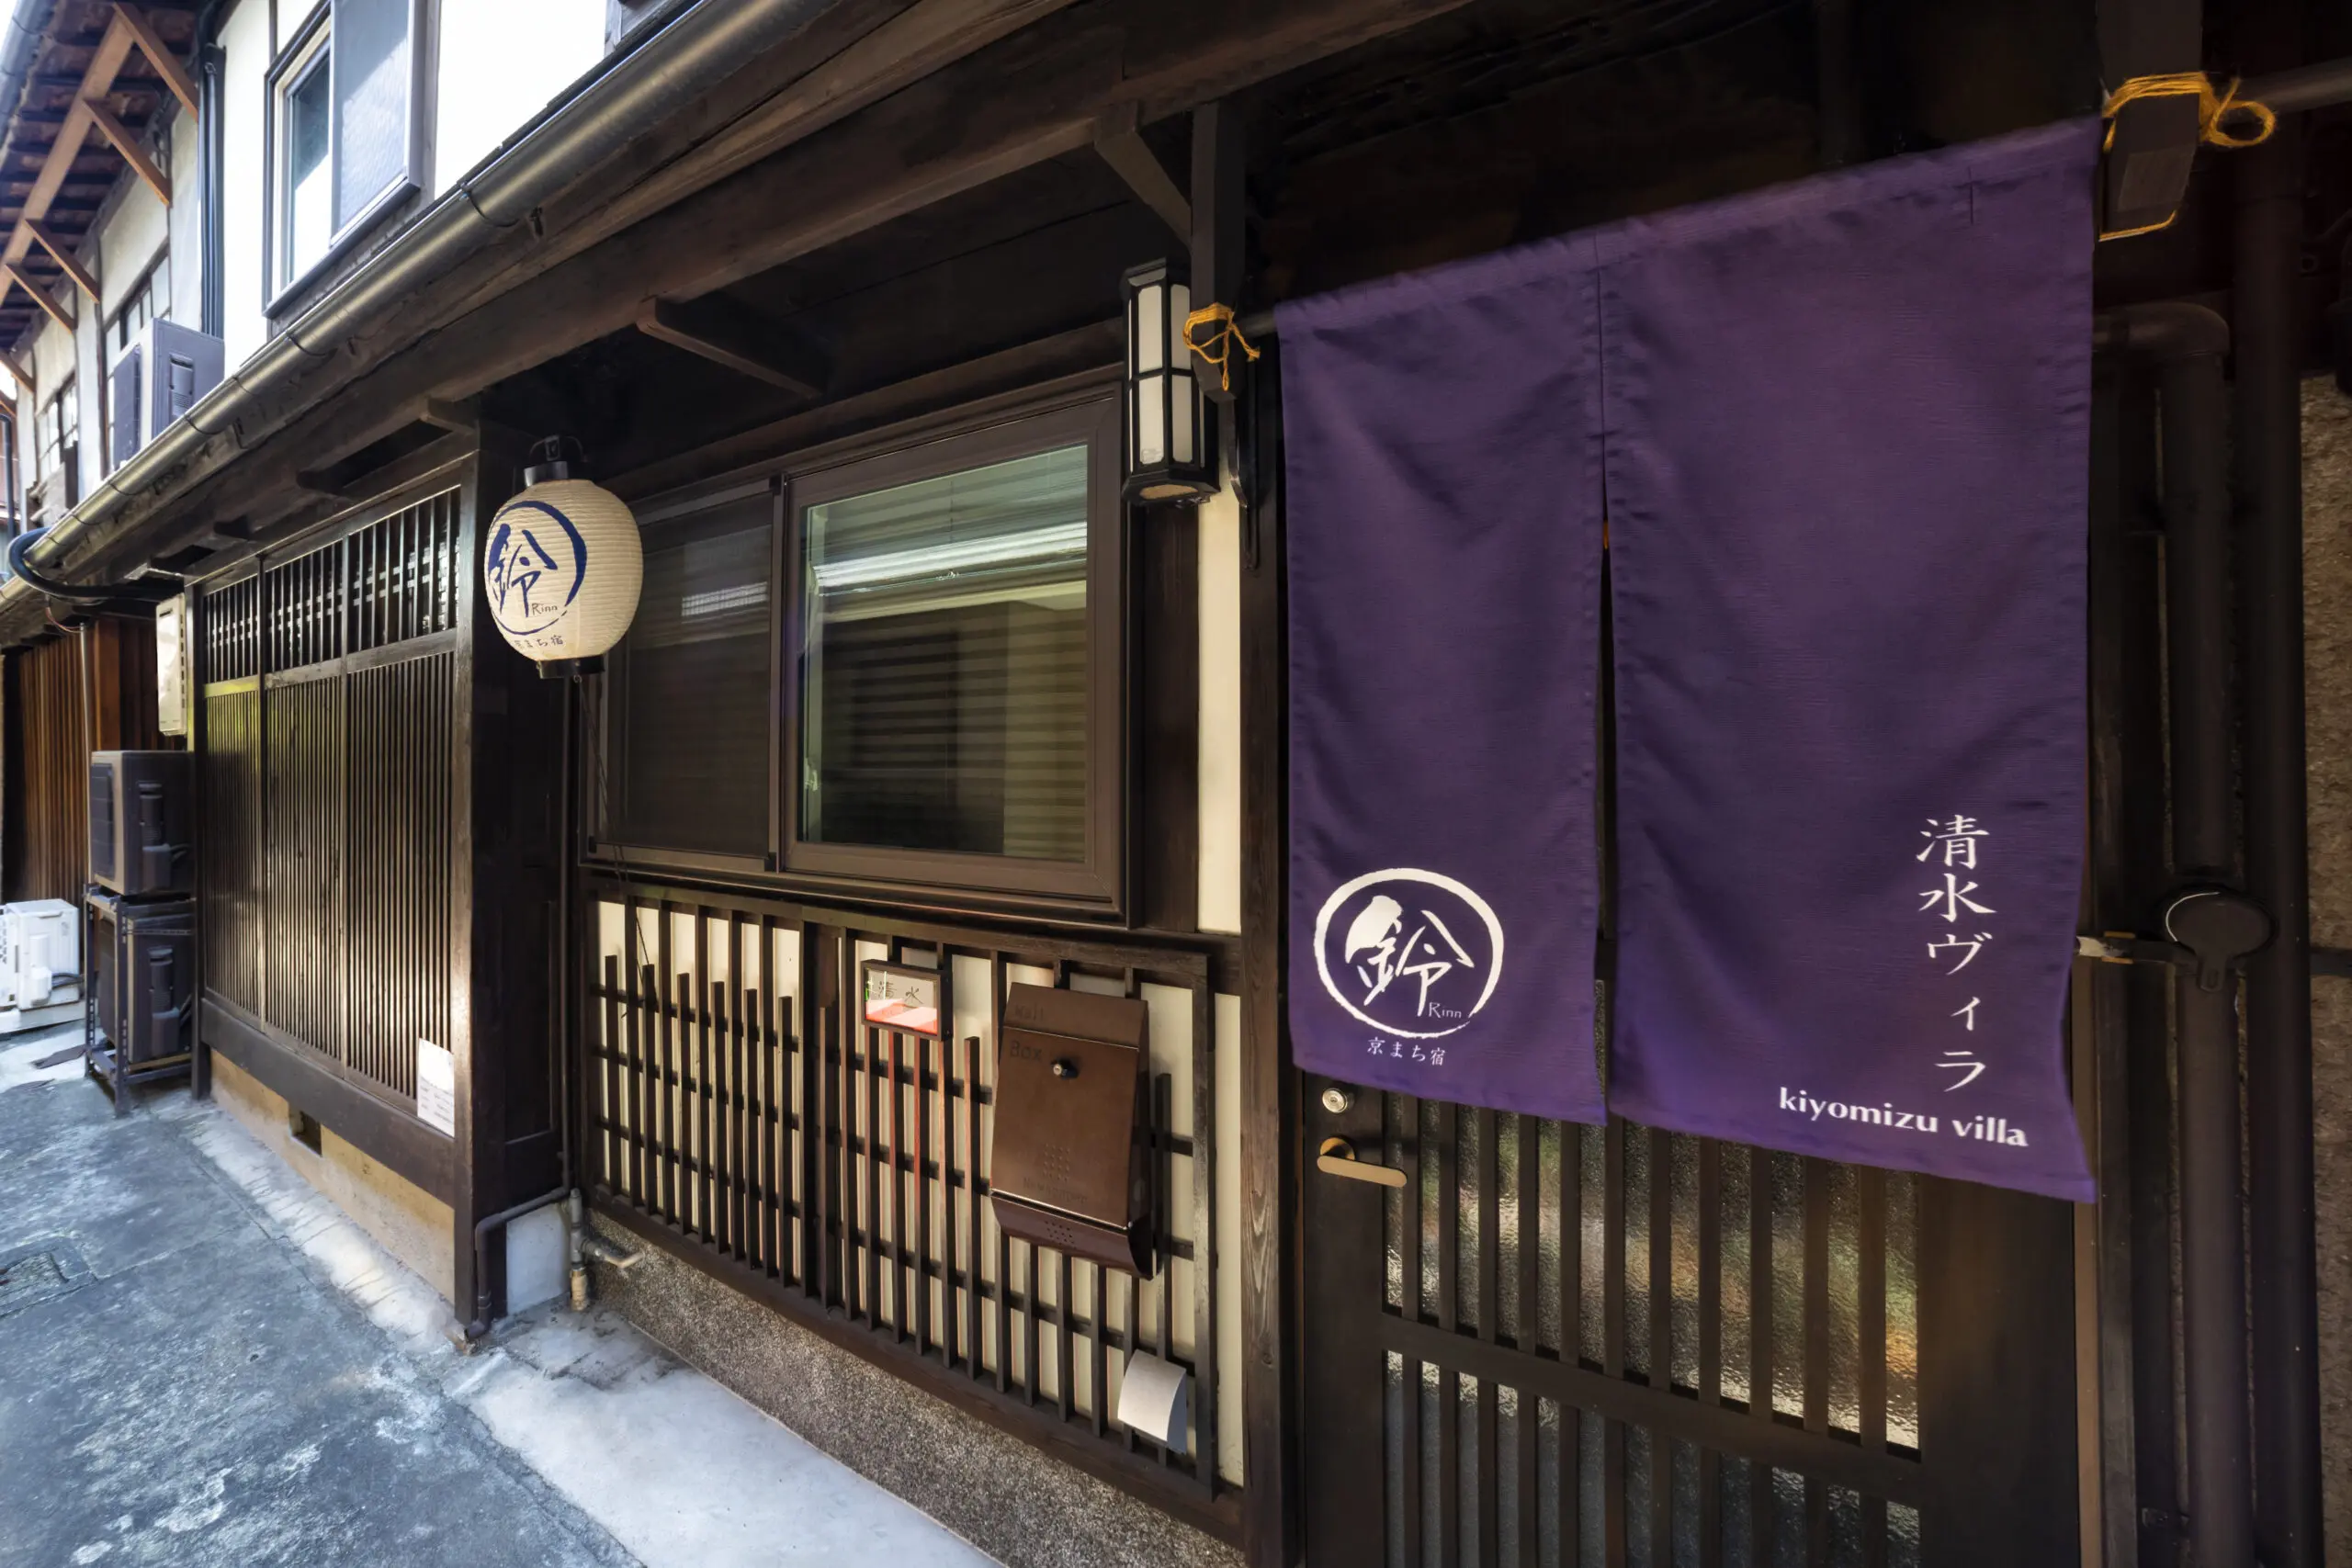 「Rinn Kiyomizu Villa」のサムネイル画像